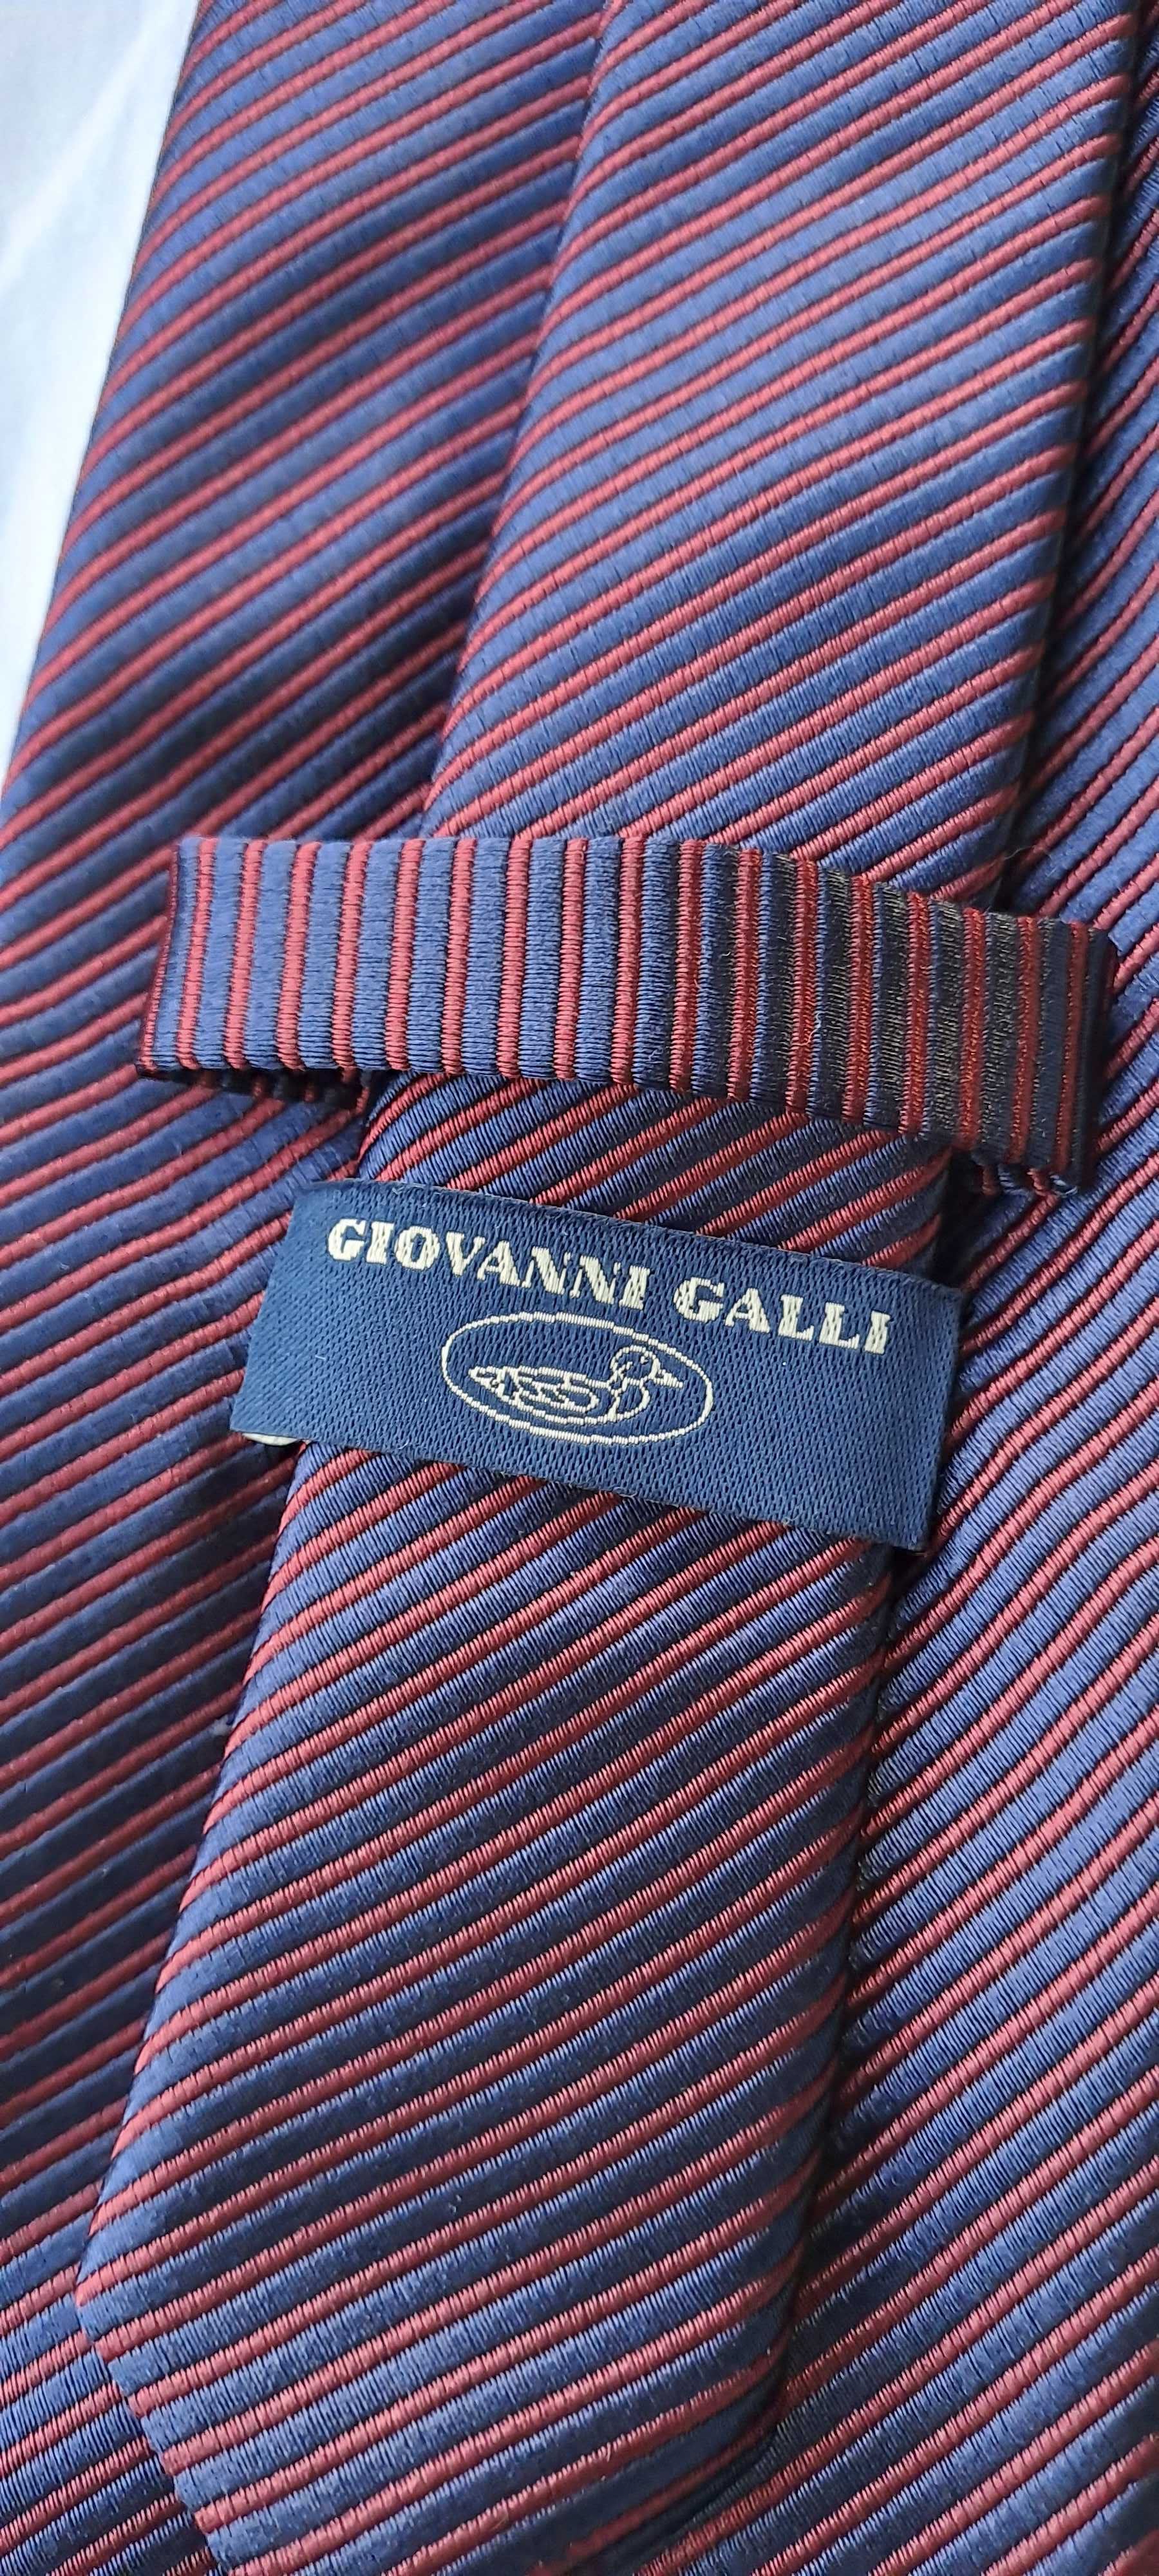 Gravata Giovanni Galli - Como Nova | Impecável